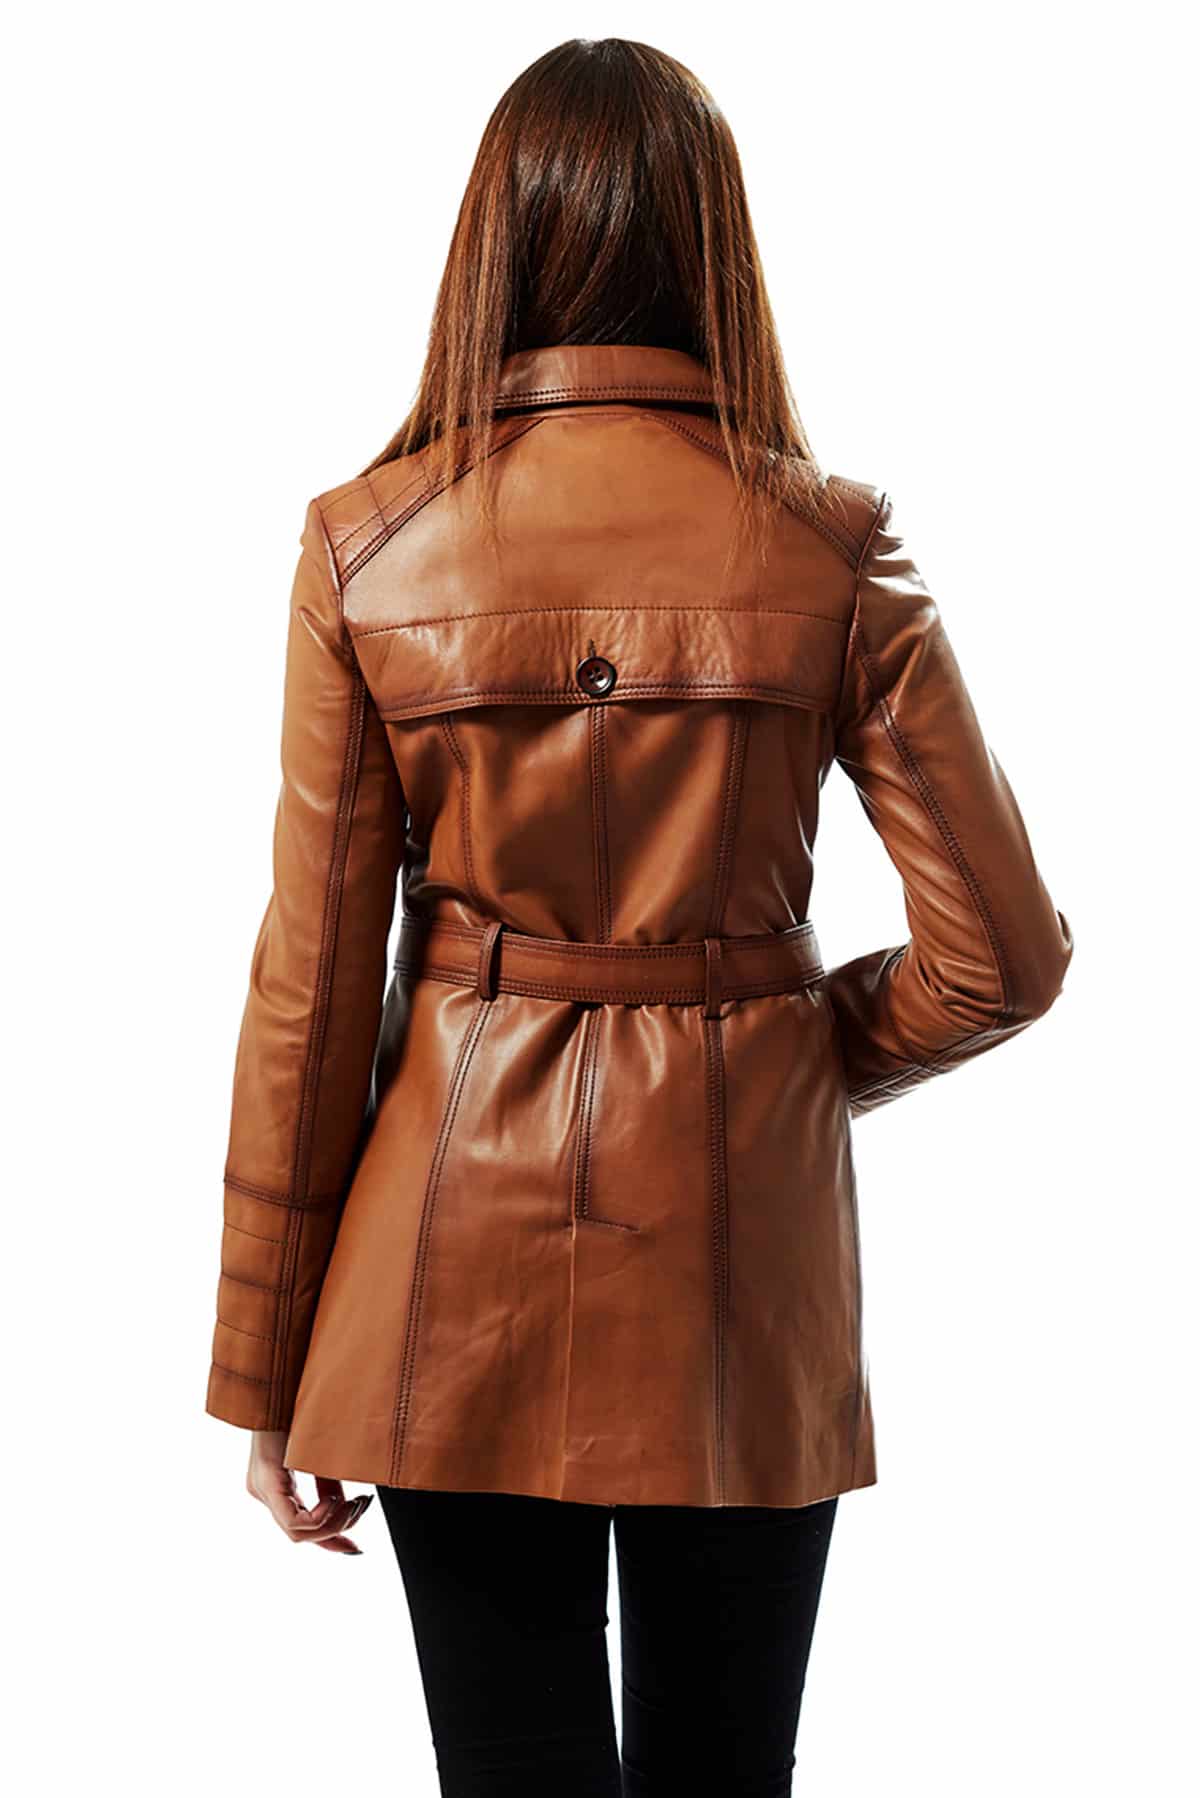 women's genuine leather jackets